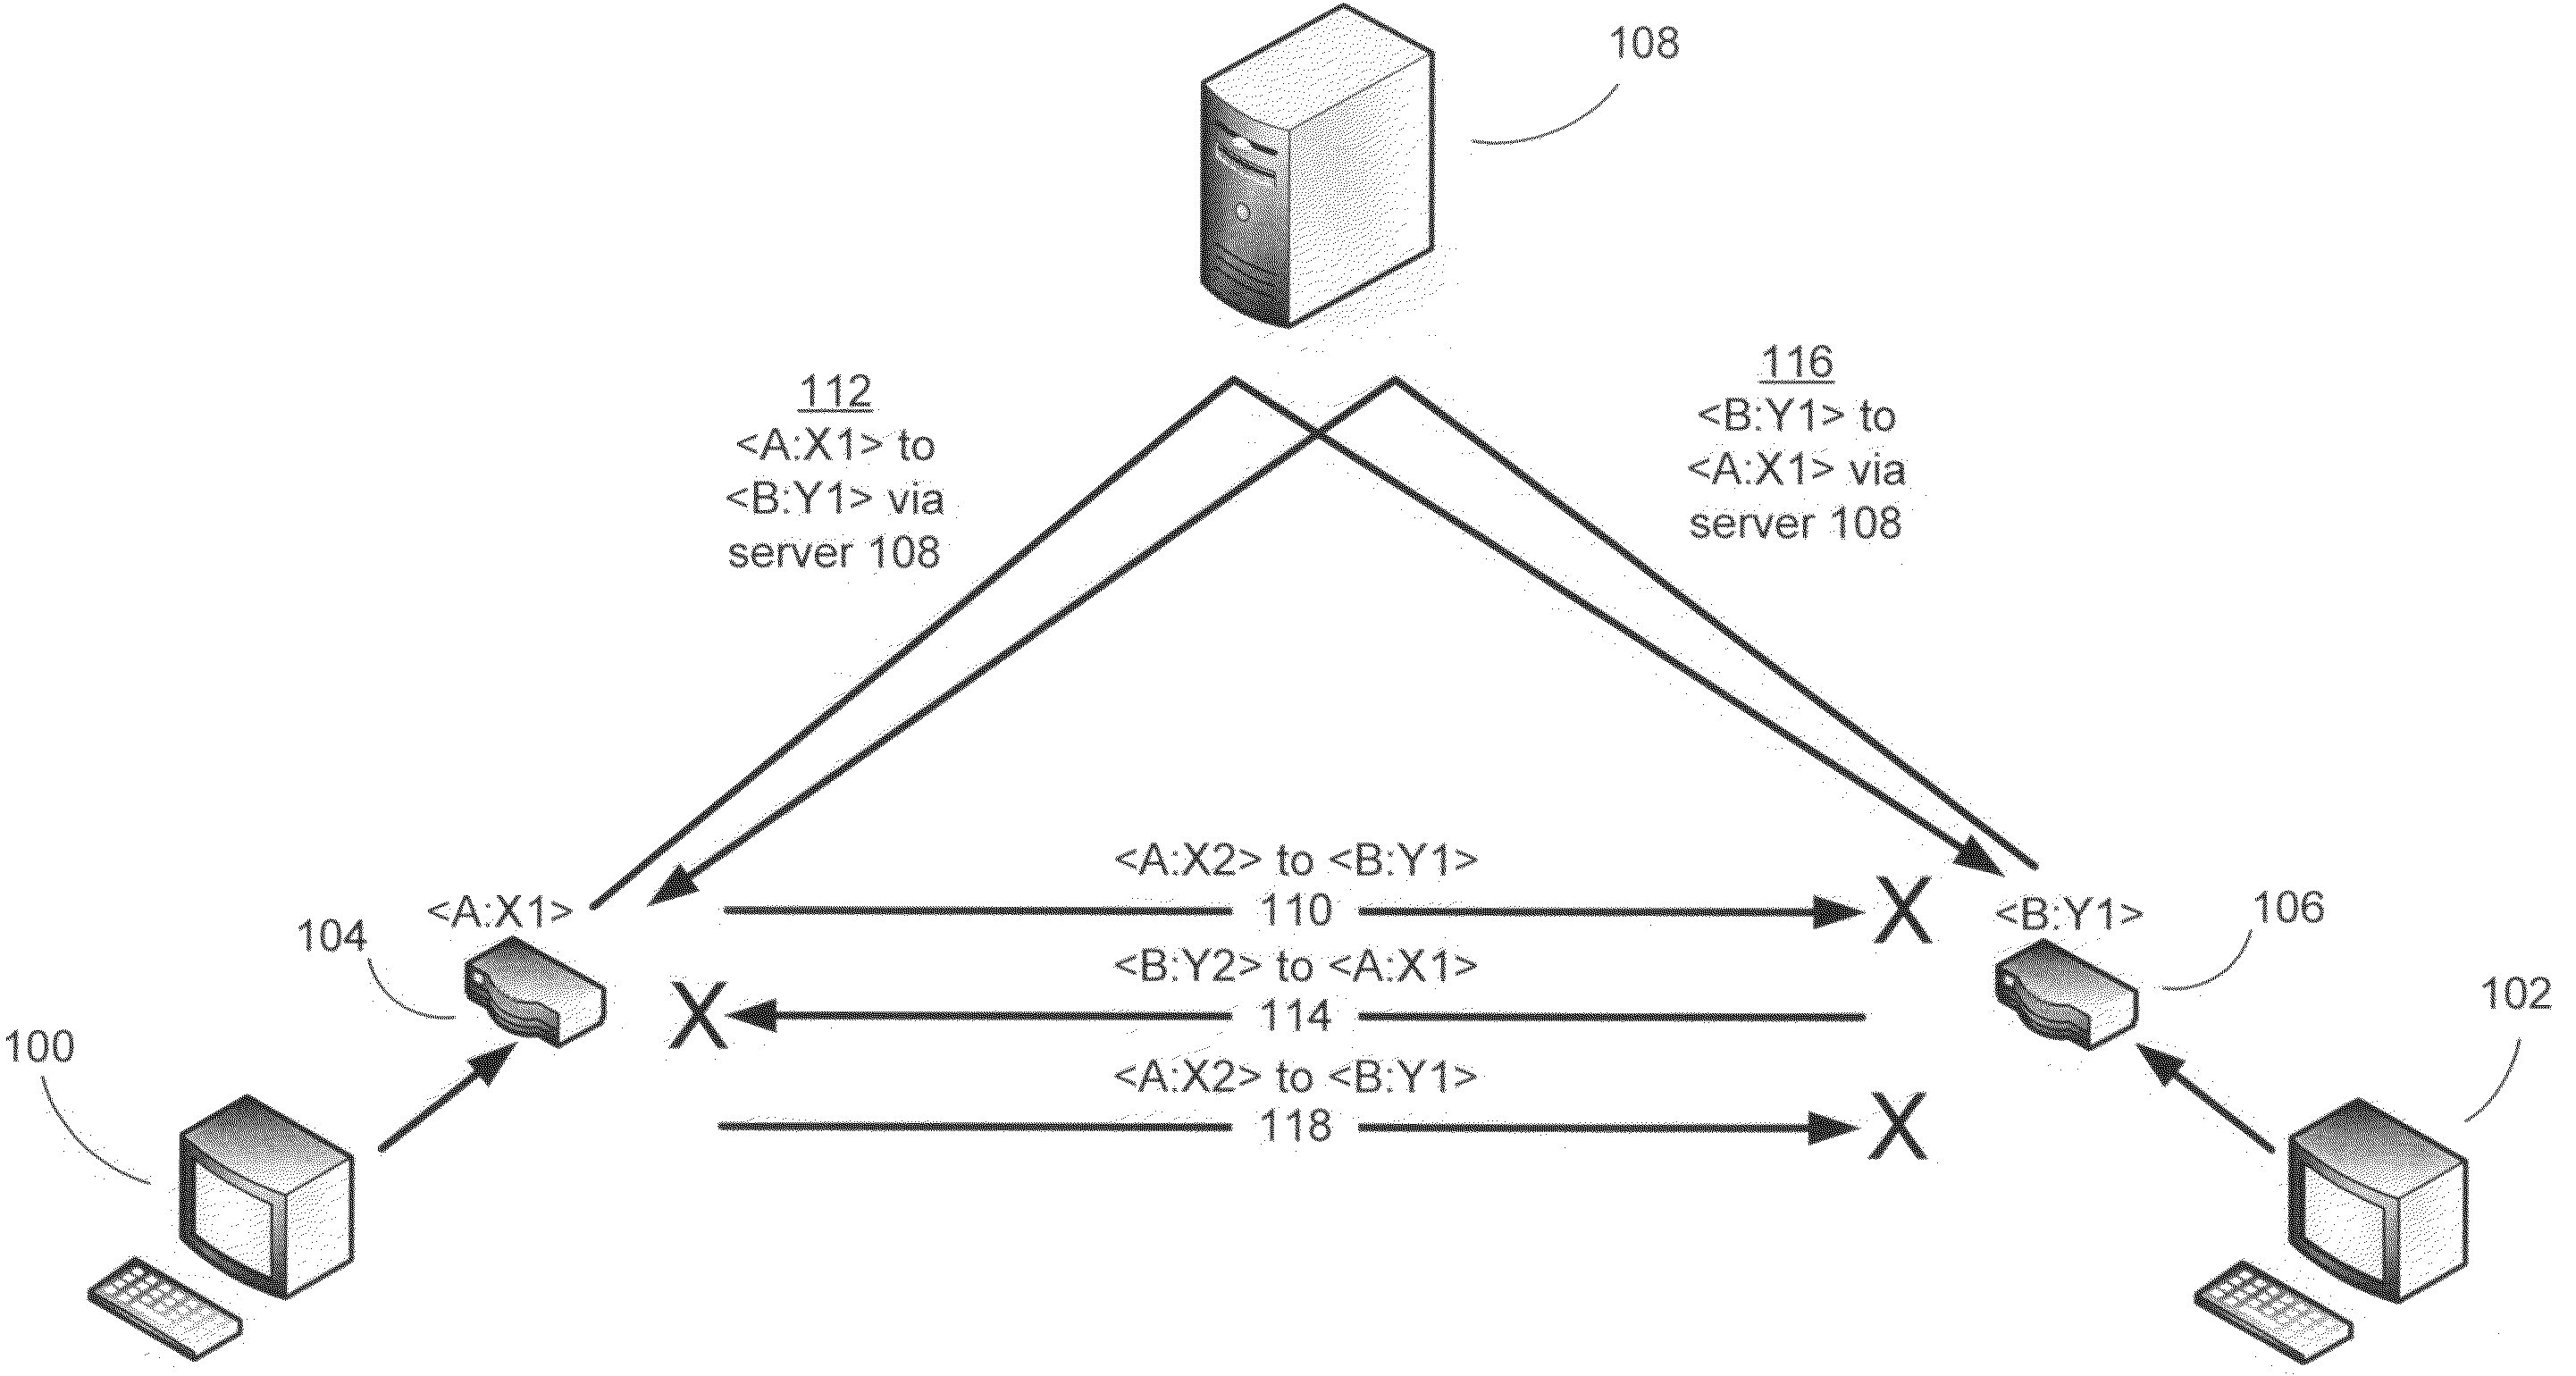 Communicating using the port-preserving nature of symmetric network address translators